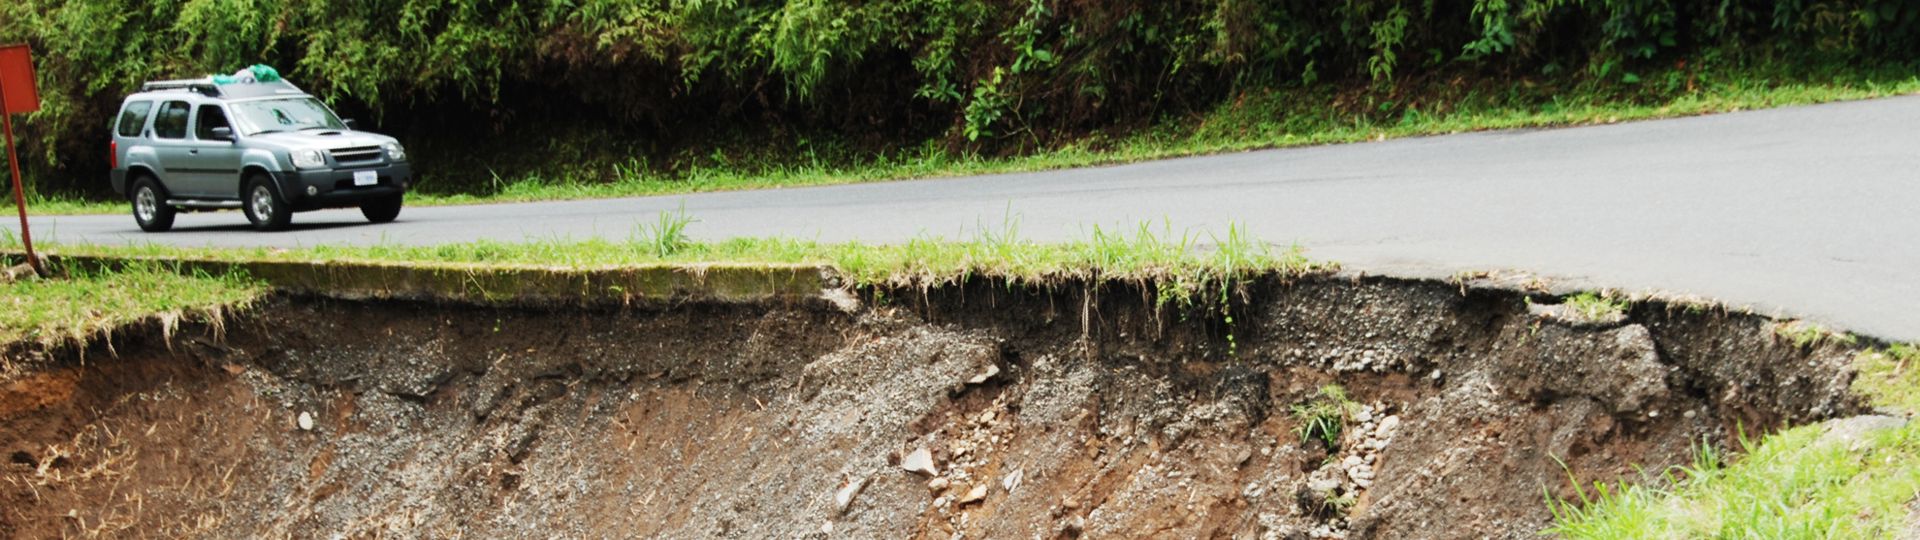 road erosion on Costa Rica highway